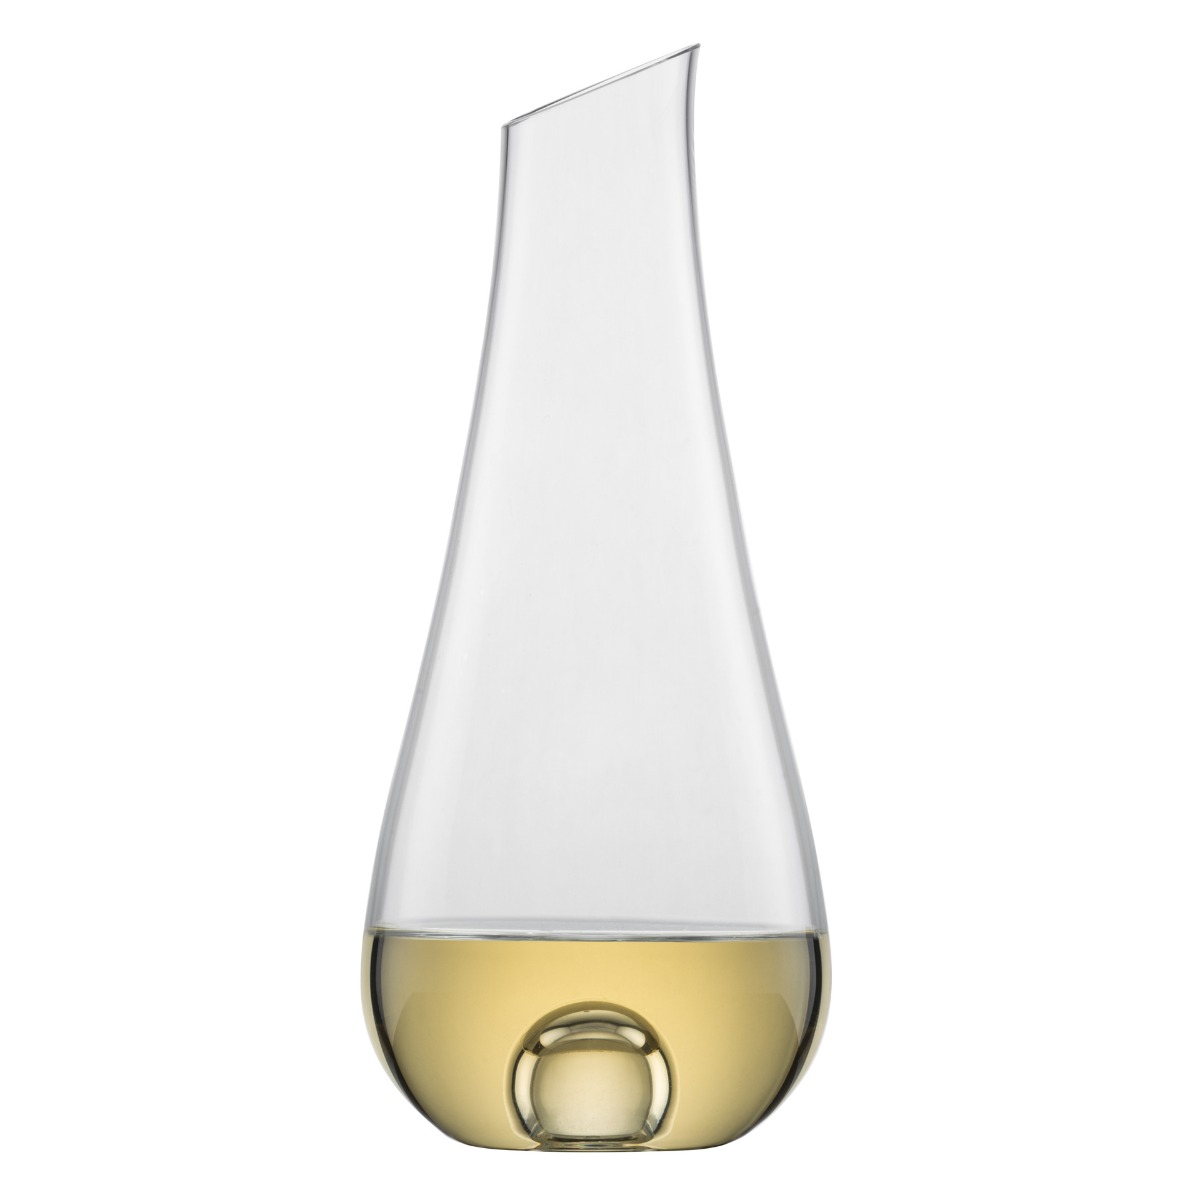 ZWIESEL HANDMADE Air Sense 0,75 l - Weindekanter / Kristallkaraffe / Weinflasche